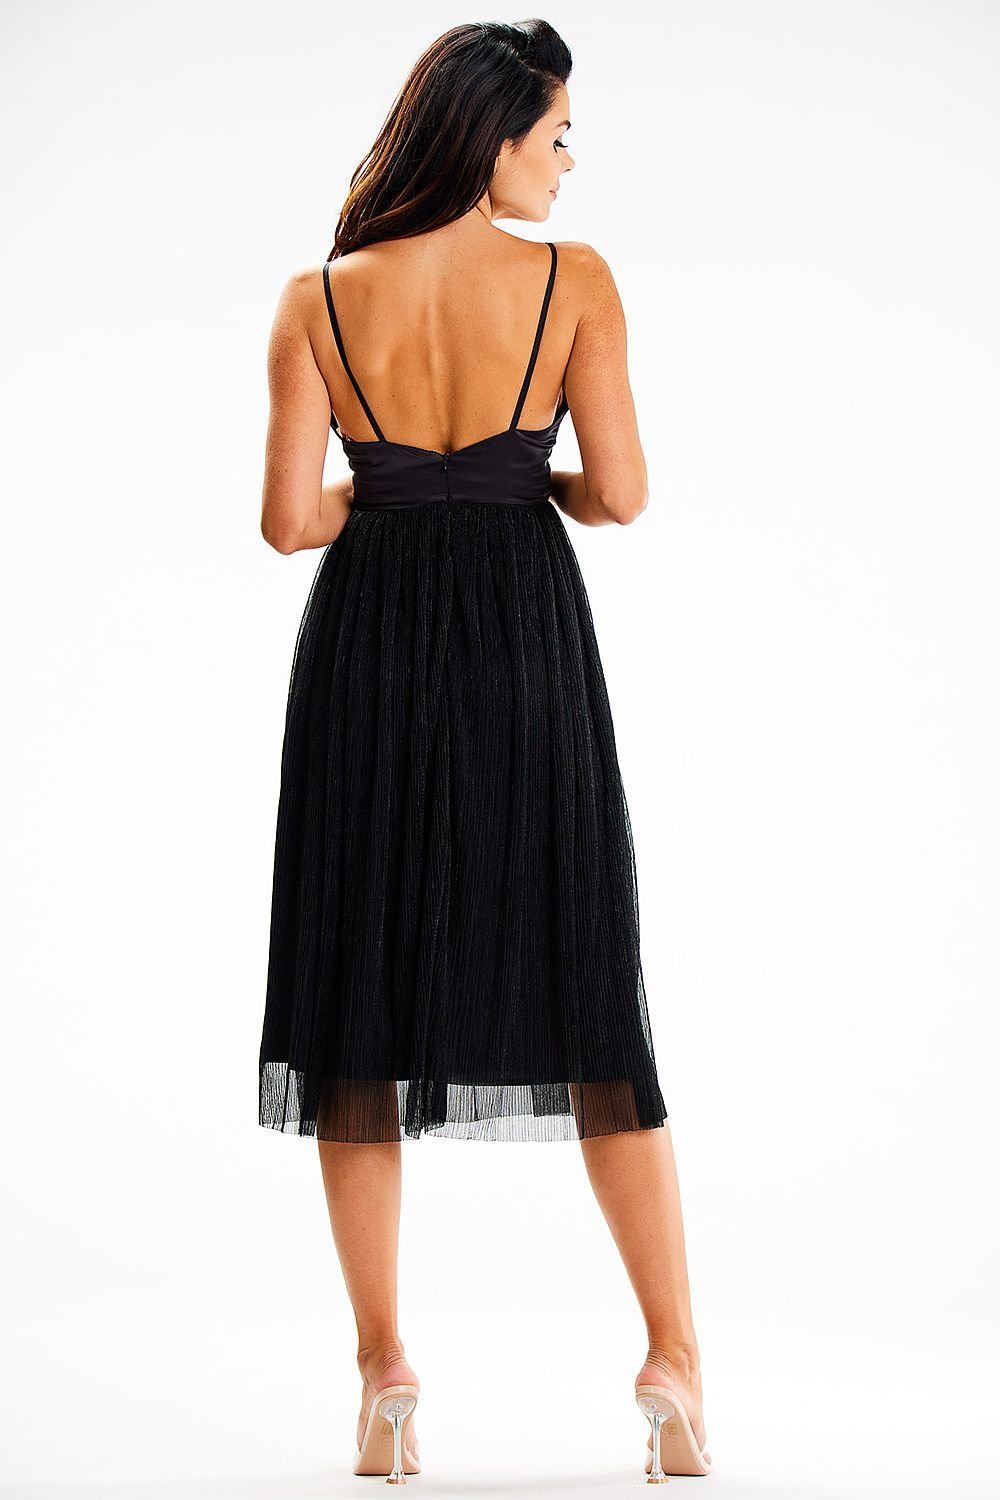 Satin Top Midi Dress In Black A Lining Sleeveless Evening Dress